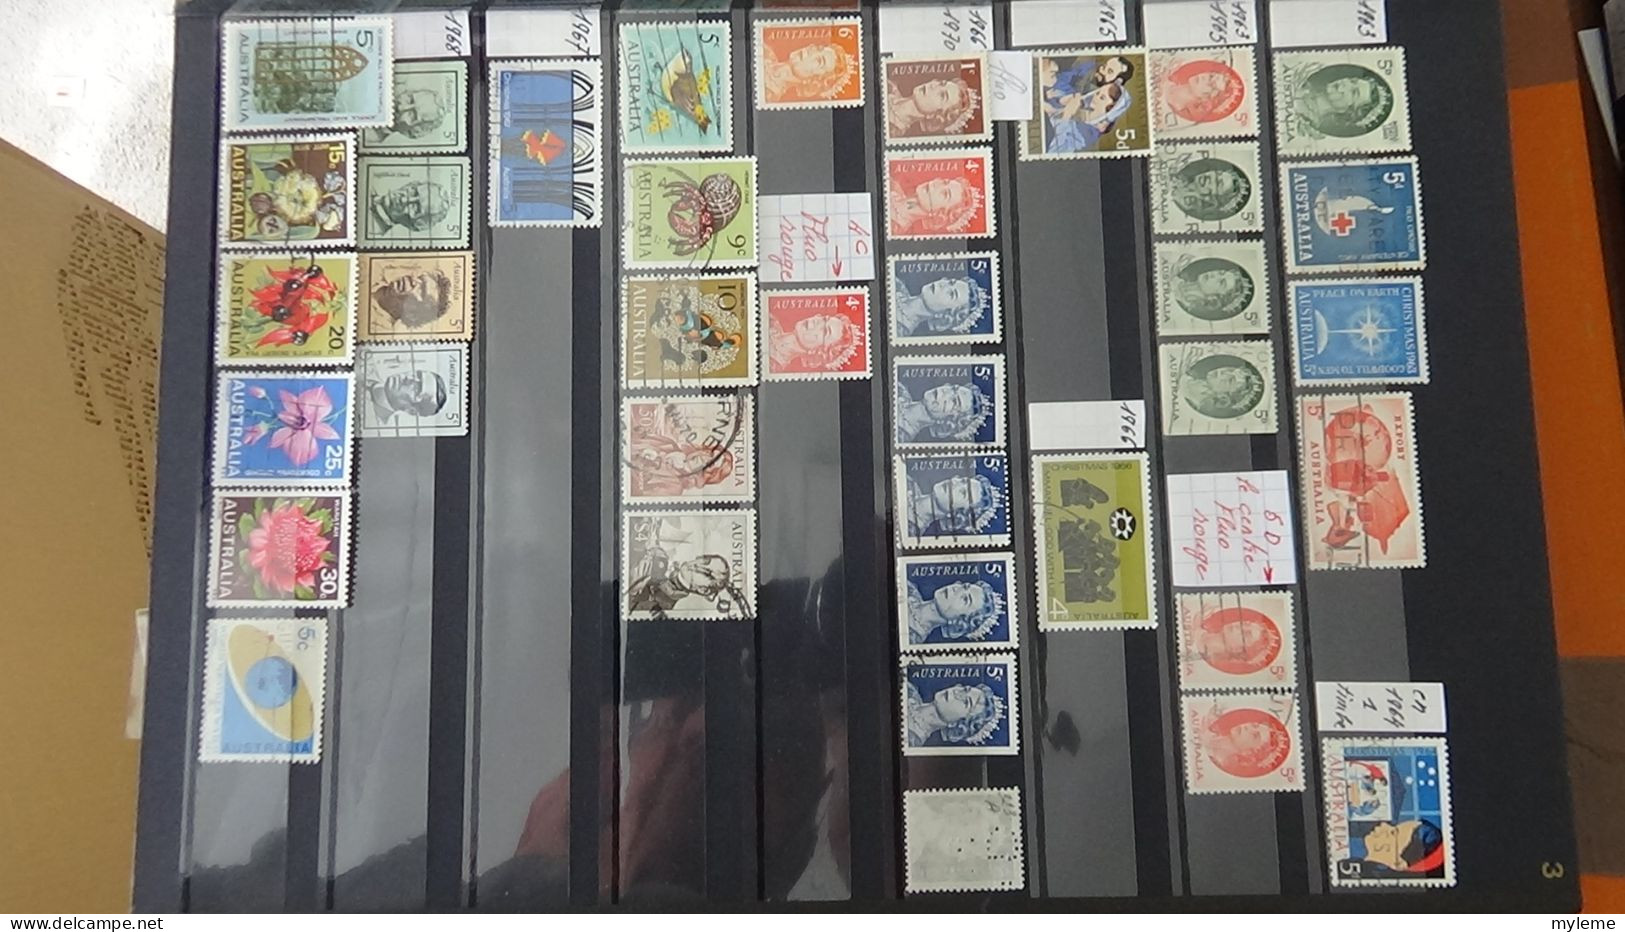 BF29 Ensemble de timbres de divers pays + Merson N° 119 + 121 + 123 **. Cote 540 euros